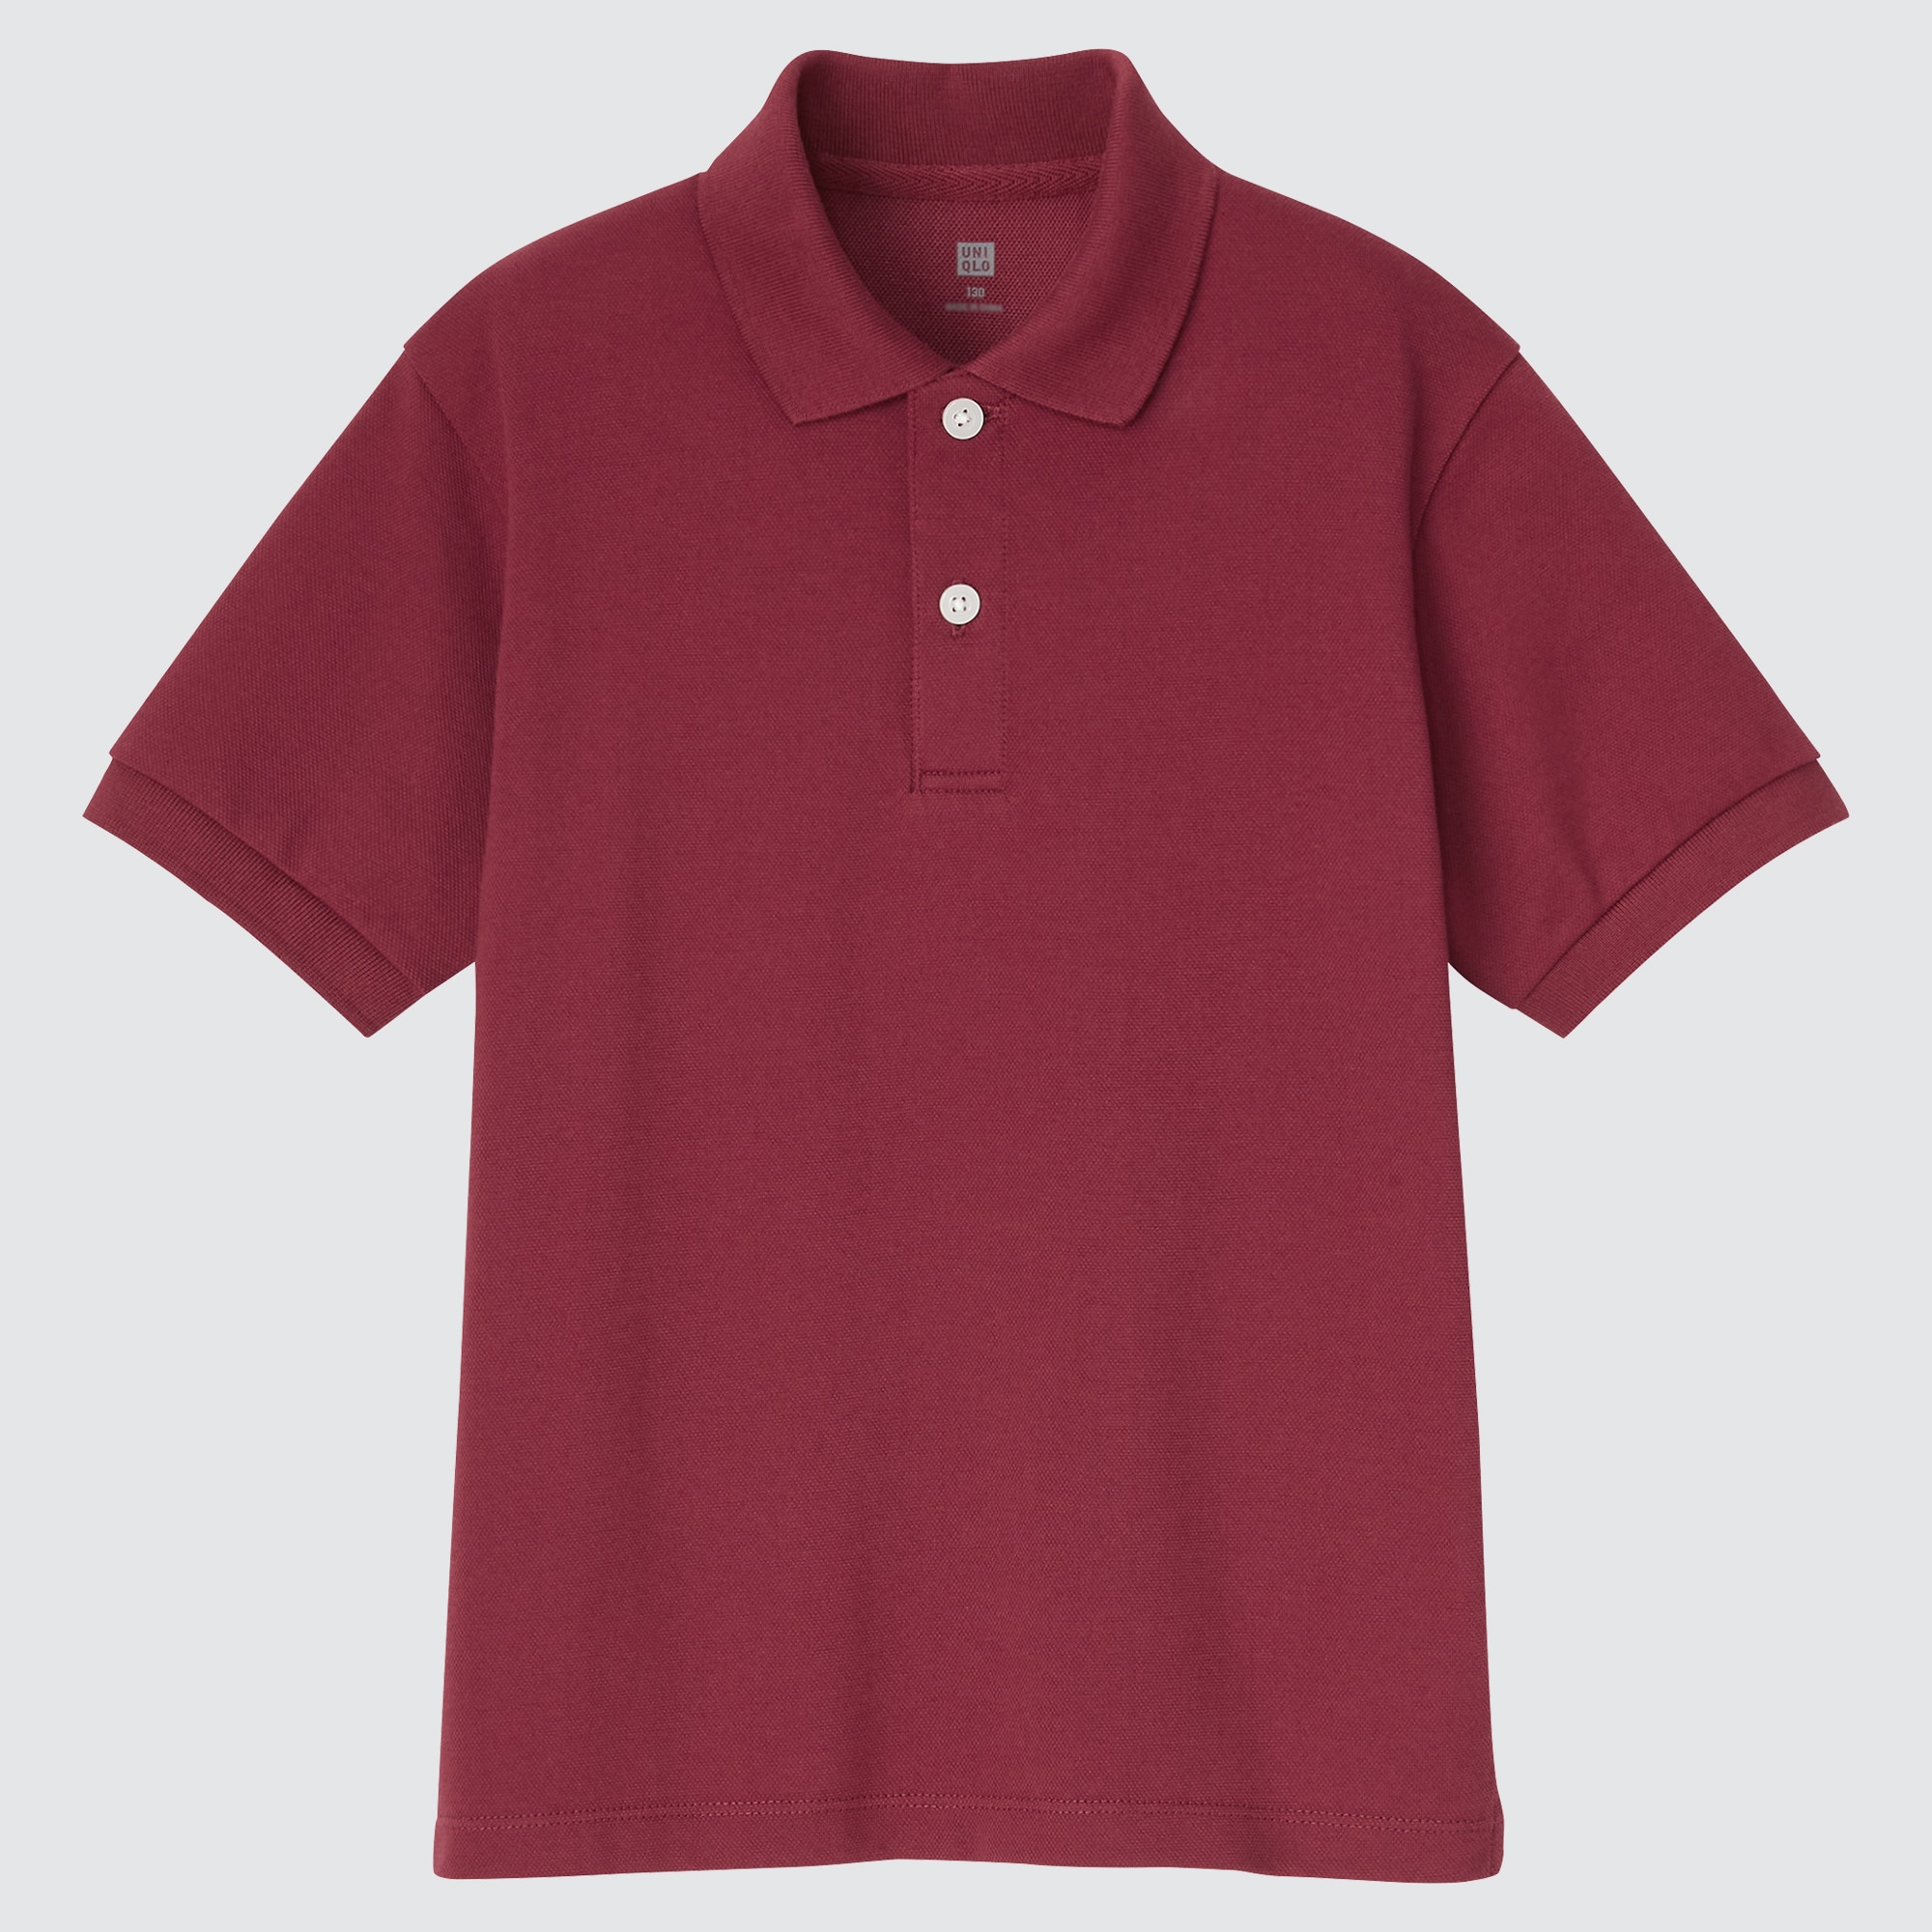 Uniqlo Singapore  MEN Dry Pique Short Sleeve Polo Shirt 1990 UP  2990 Shop now httpsuniqlocom2cUTWHF  Facebook